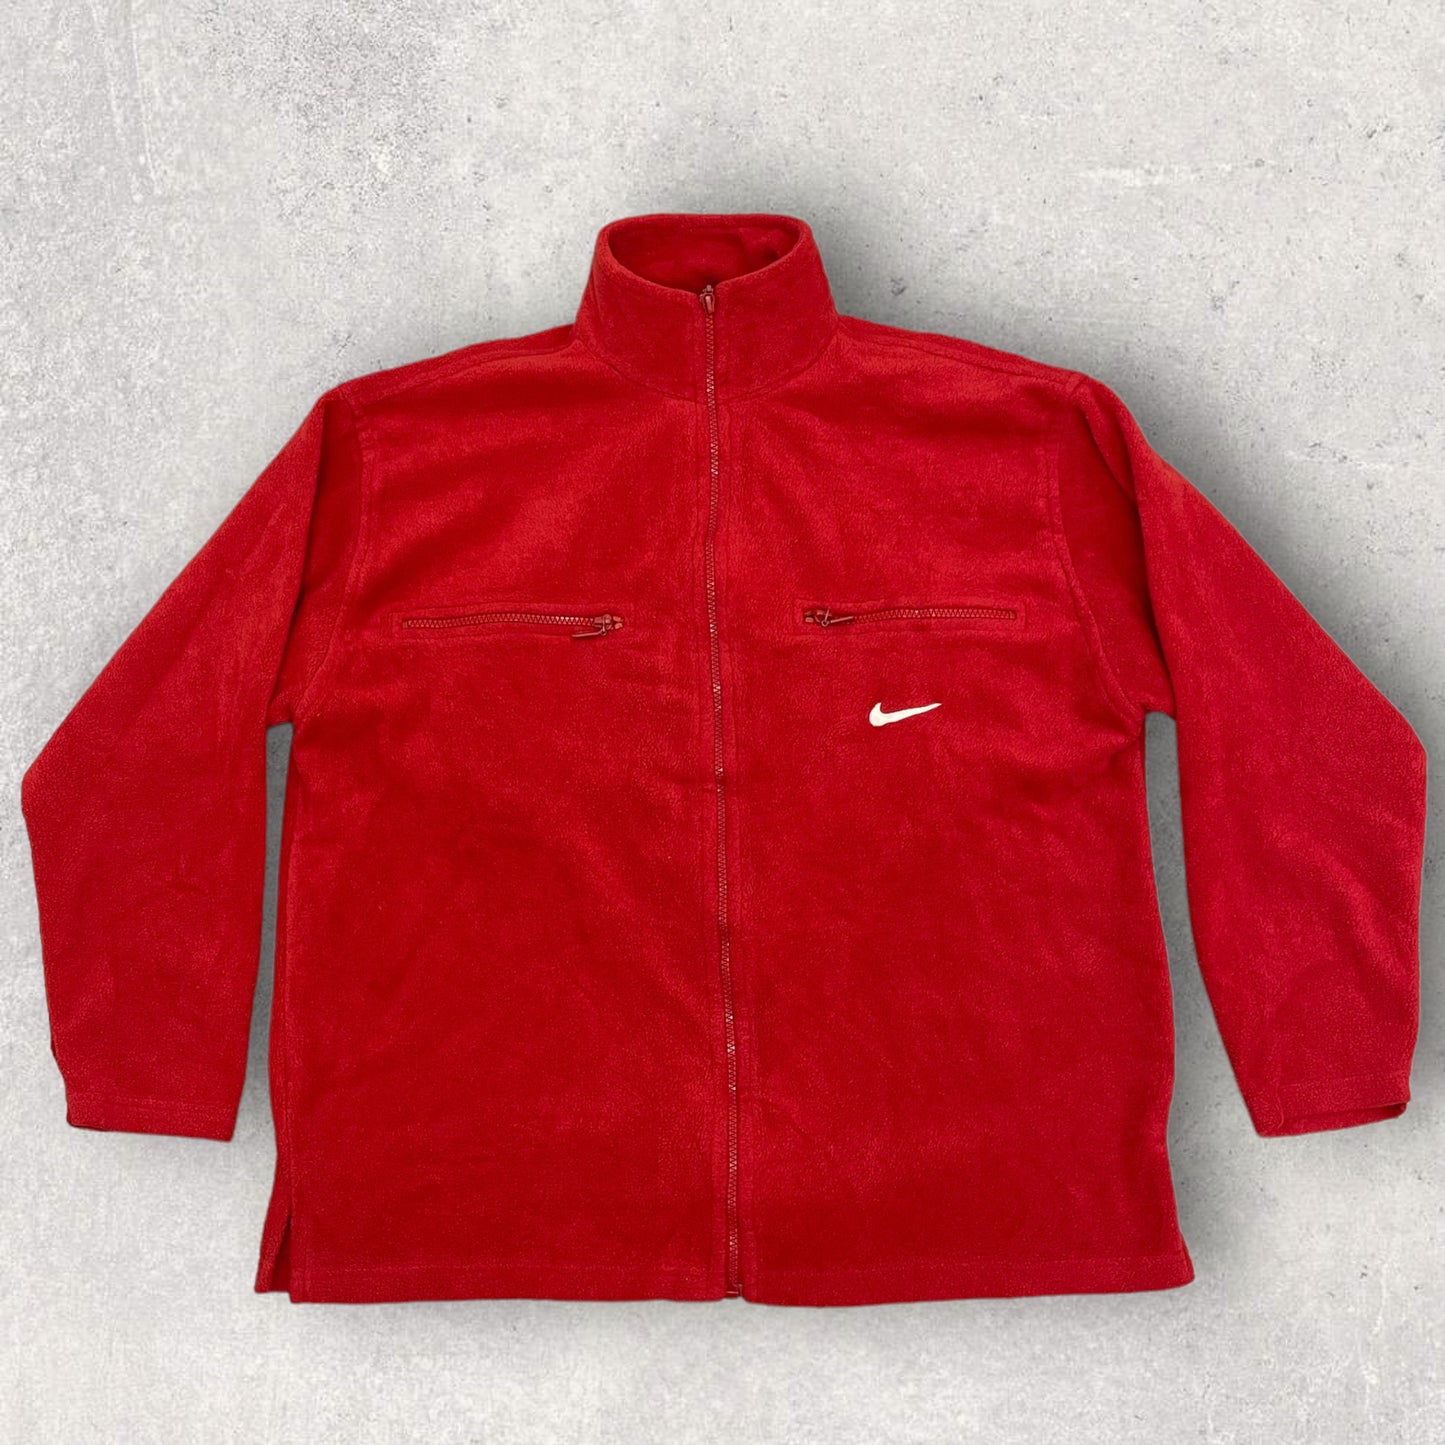 Vintage Nike Fleece Jacket Size M Red 90s Retro FL_2